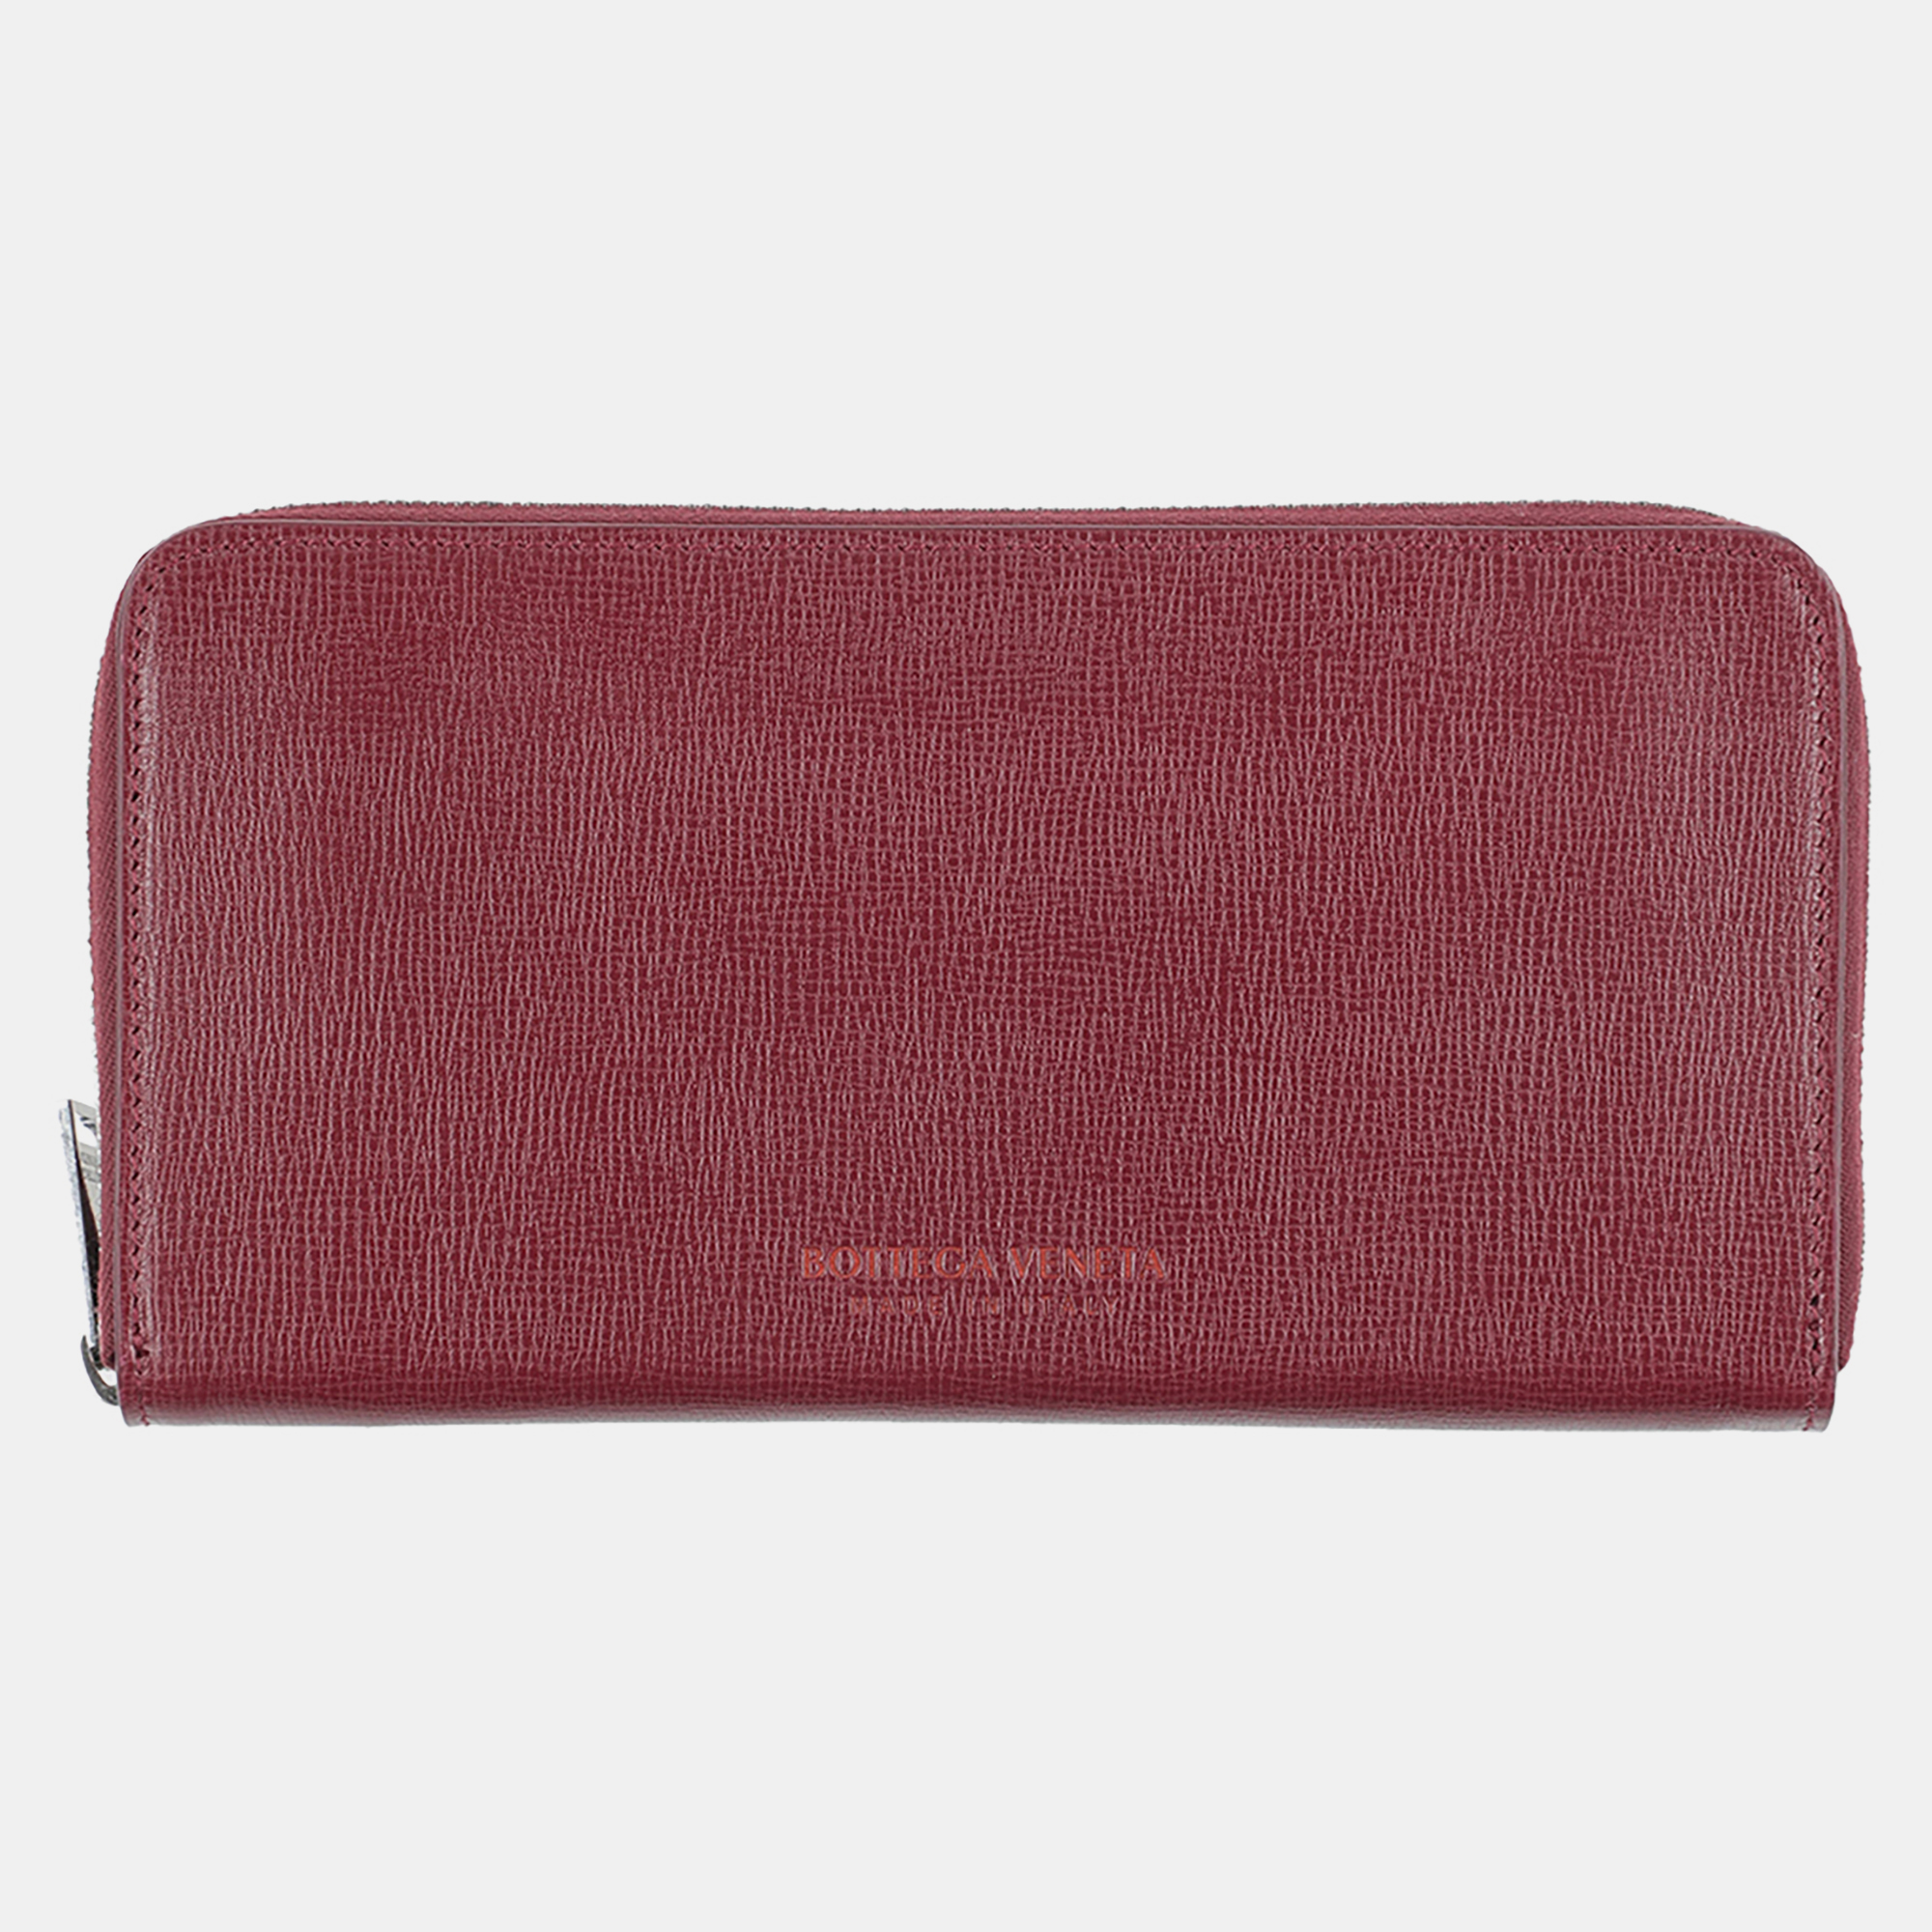 Bottega veneta red leather zip around wallet